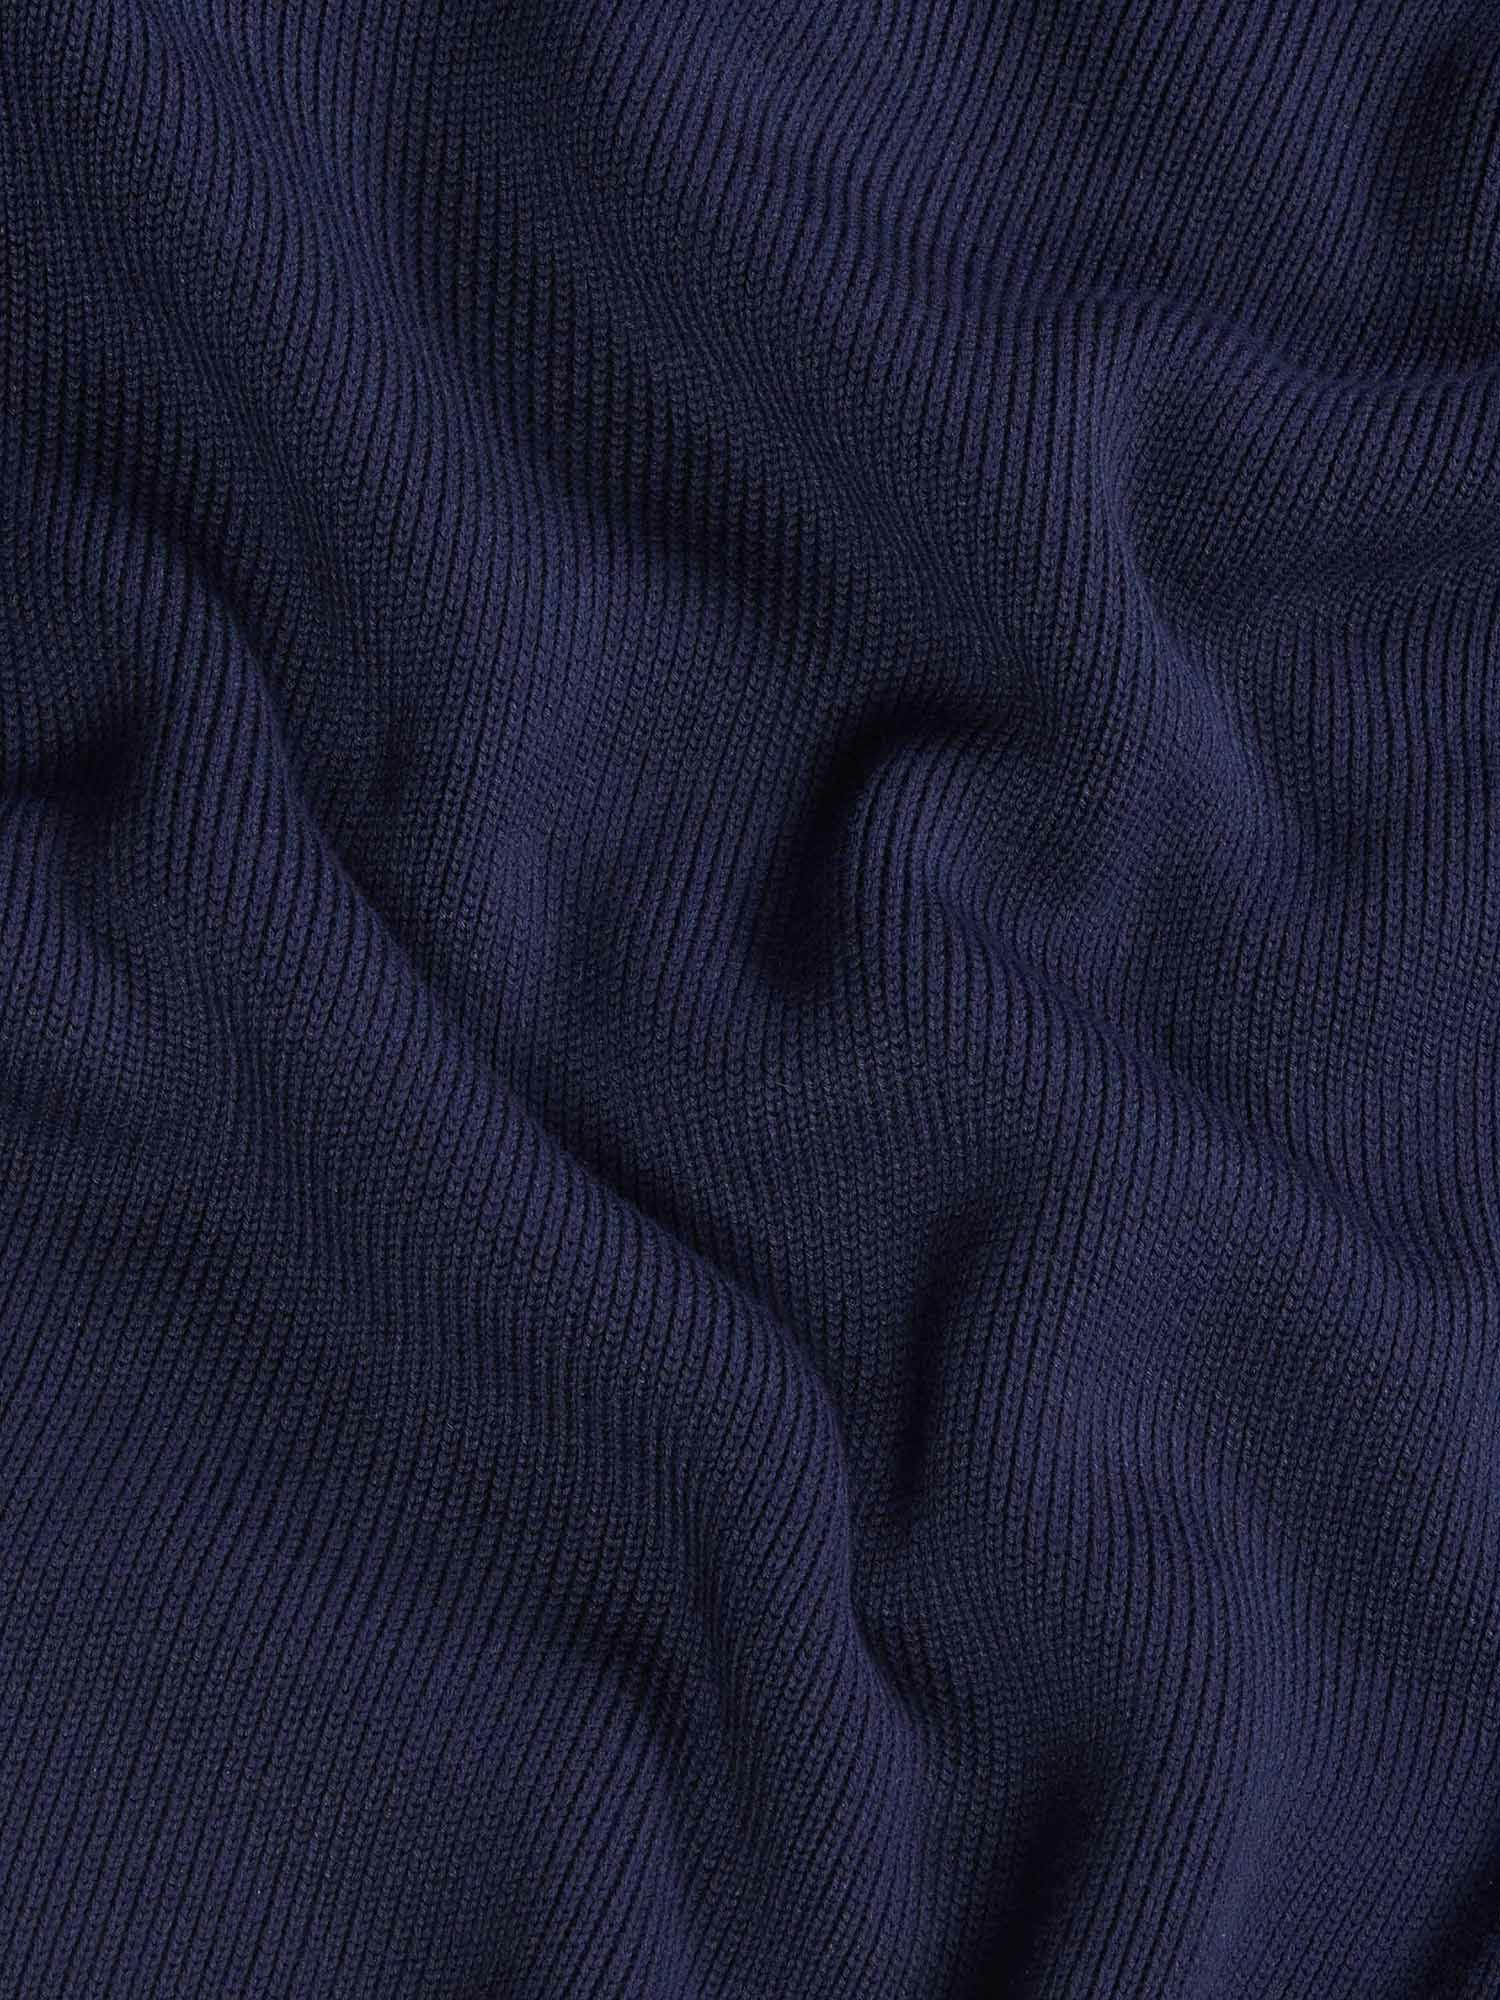 https://cdn.shopify.com/s/files/1/0035/1309/0115/products/Summer-Knitwear-Circulose-Open-Collar-Knit-Jumper-Navy-Blue-2.jpg?v=1662476484